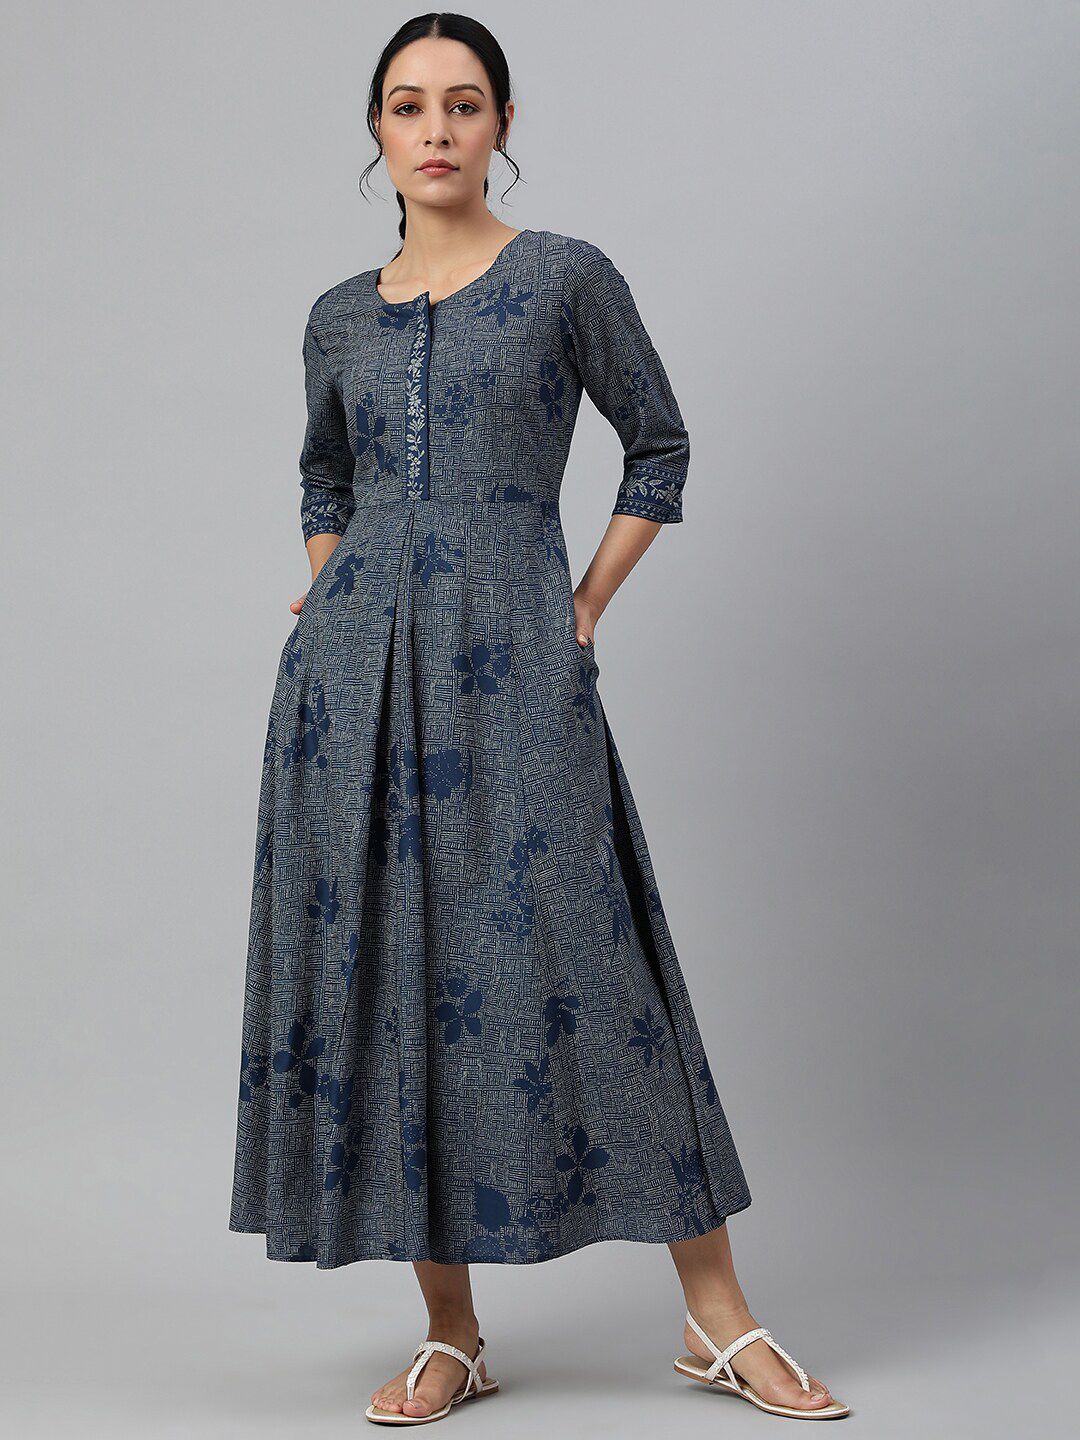 W Blue Floral Chiffon A-Line Midi Dress Price in India